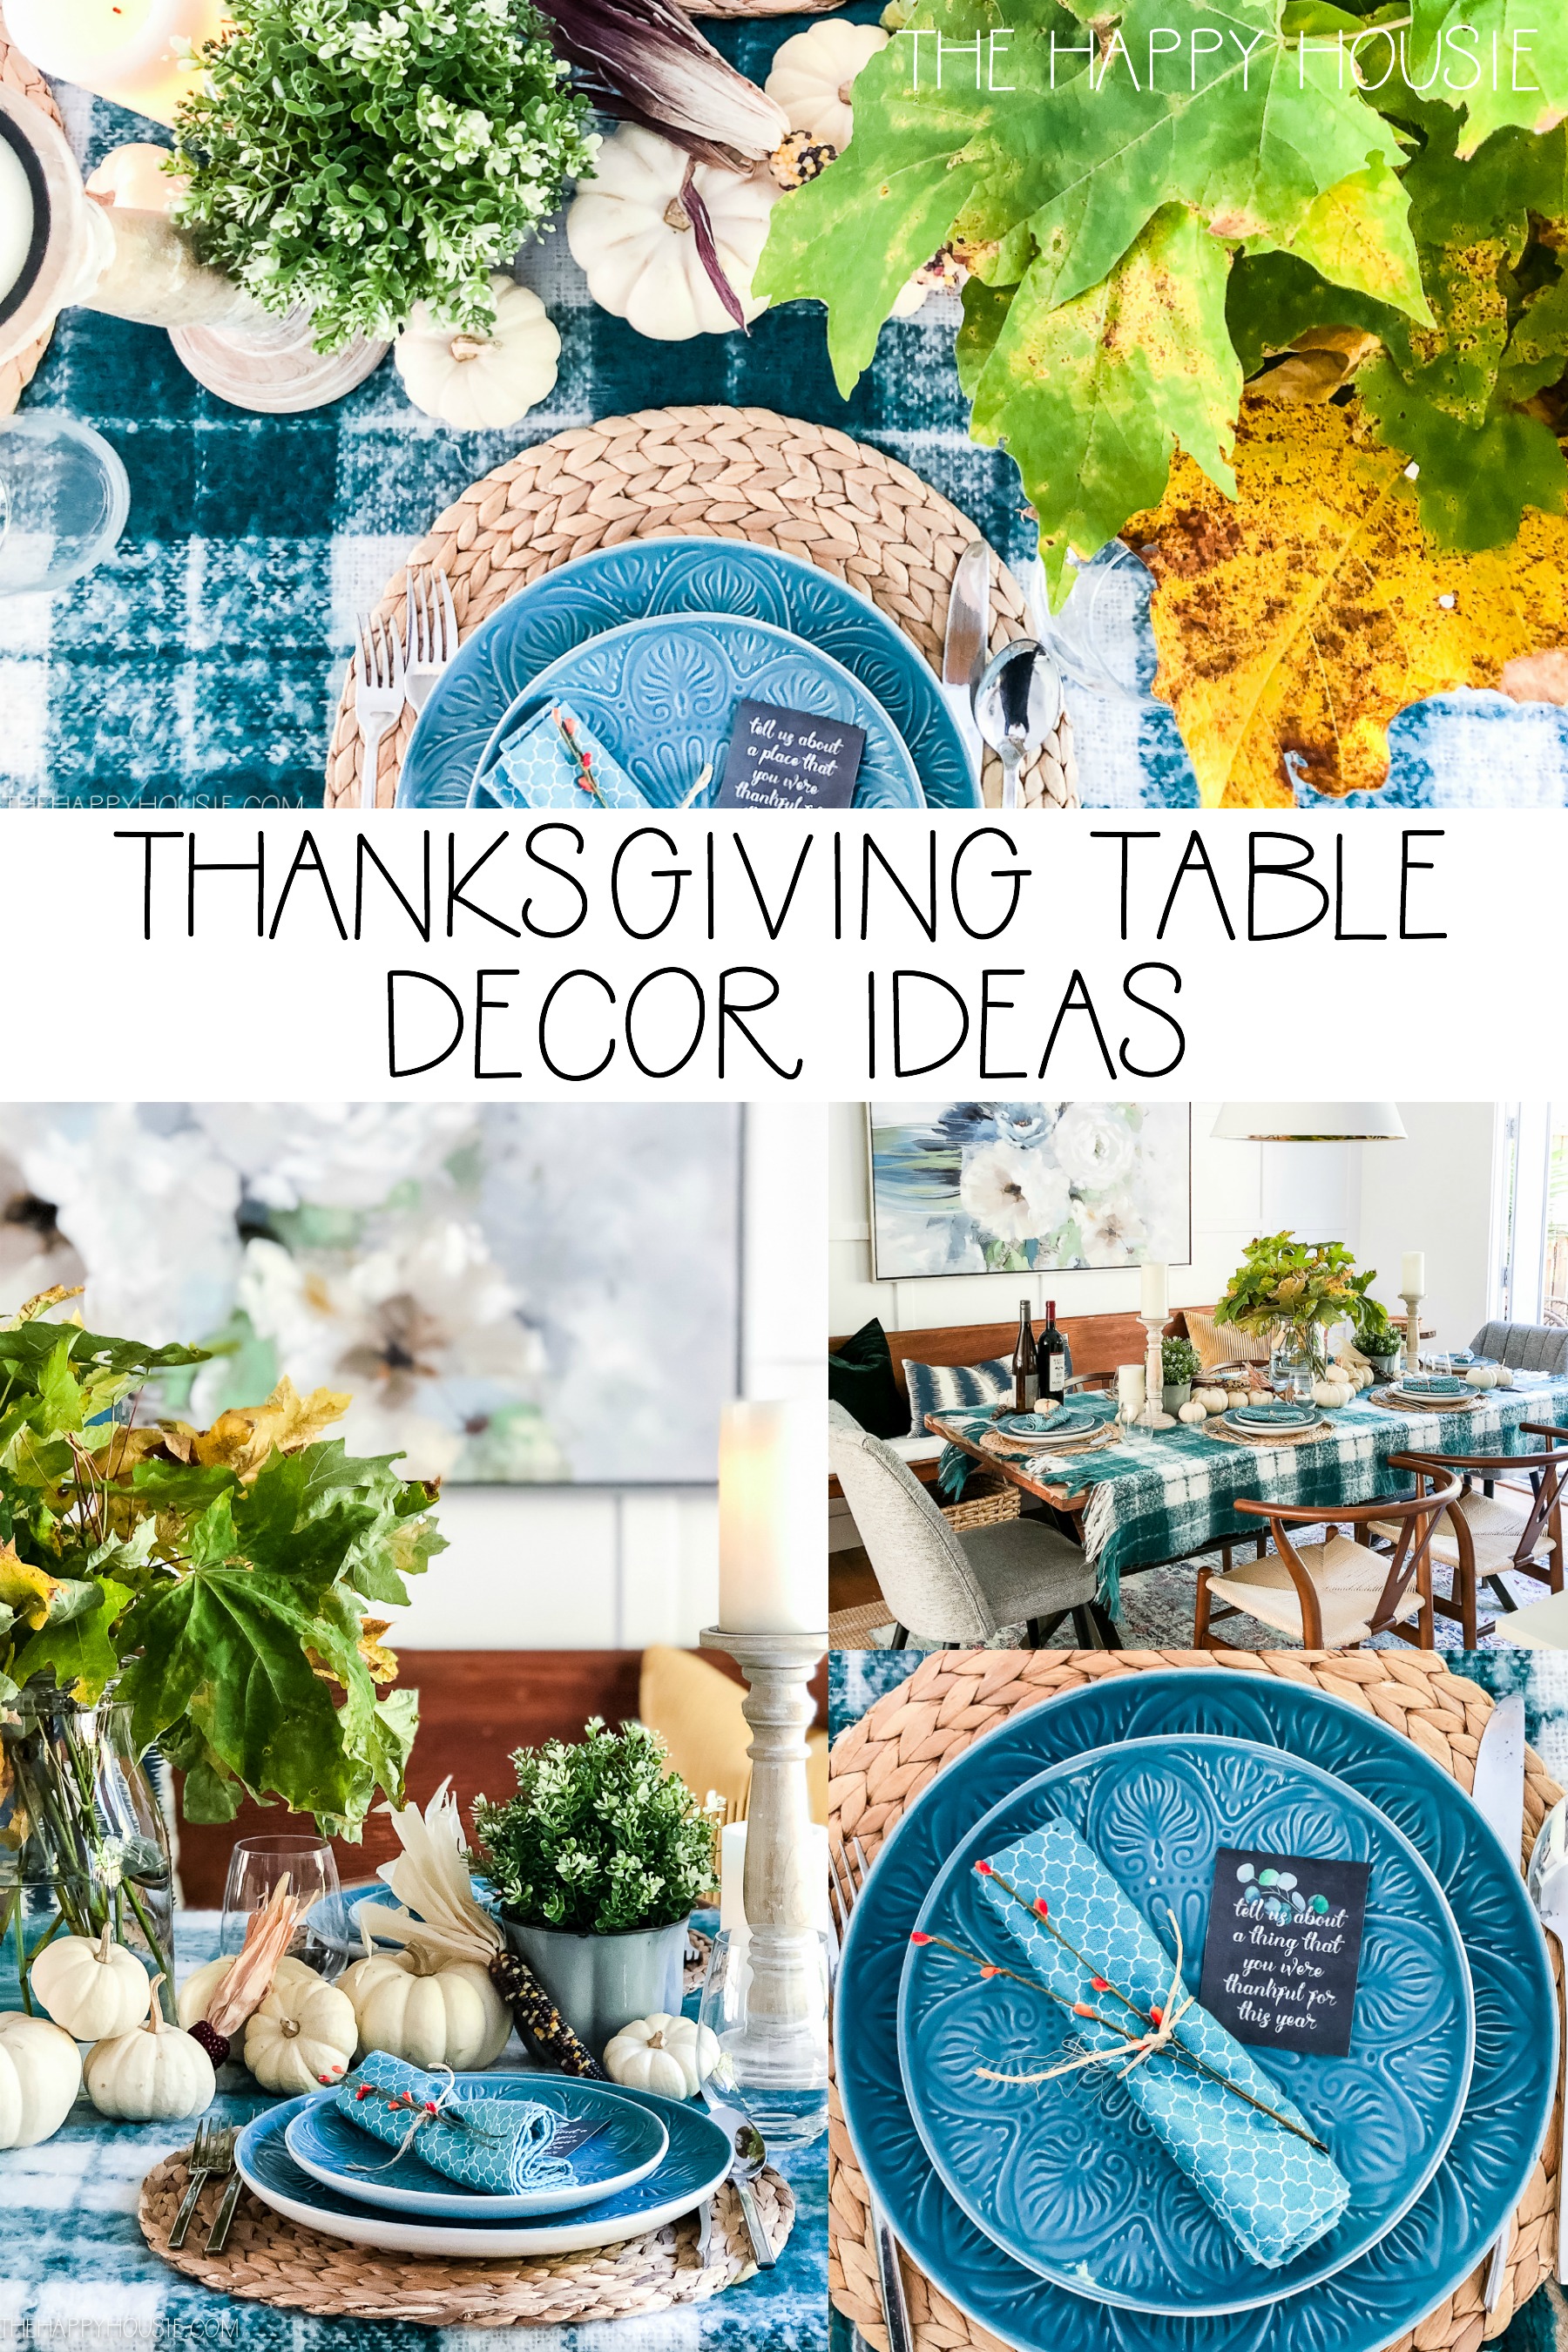 Thanksgiving Table Decor Ideas poster.